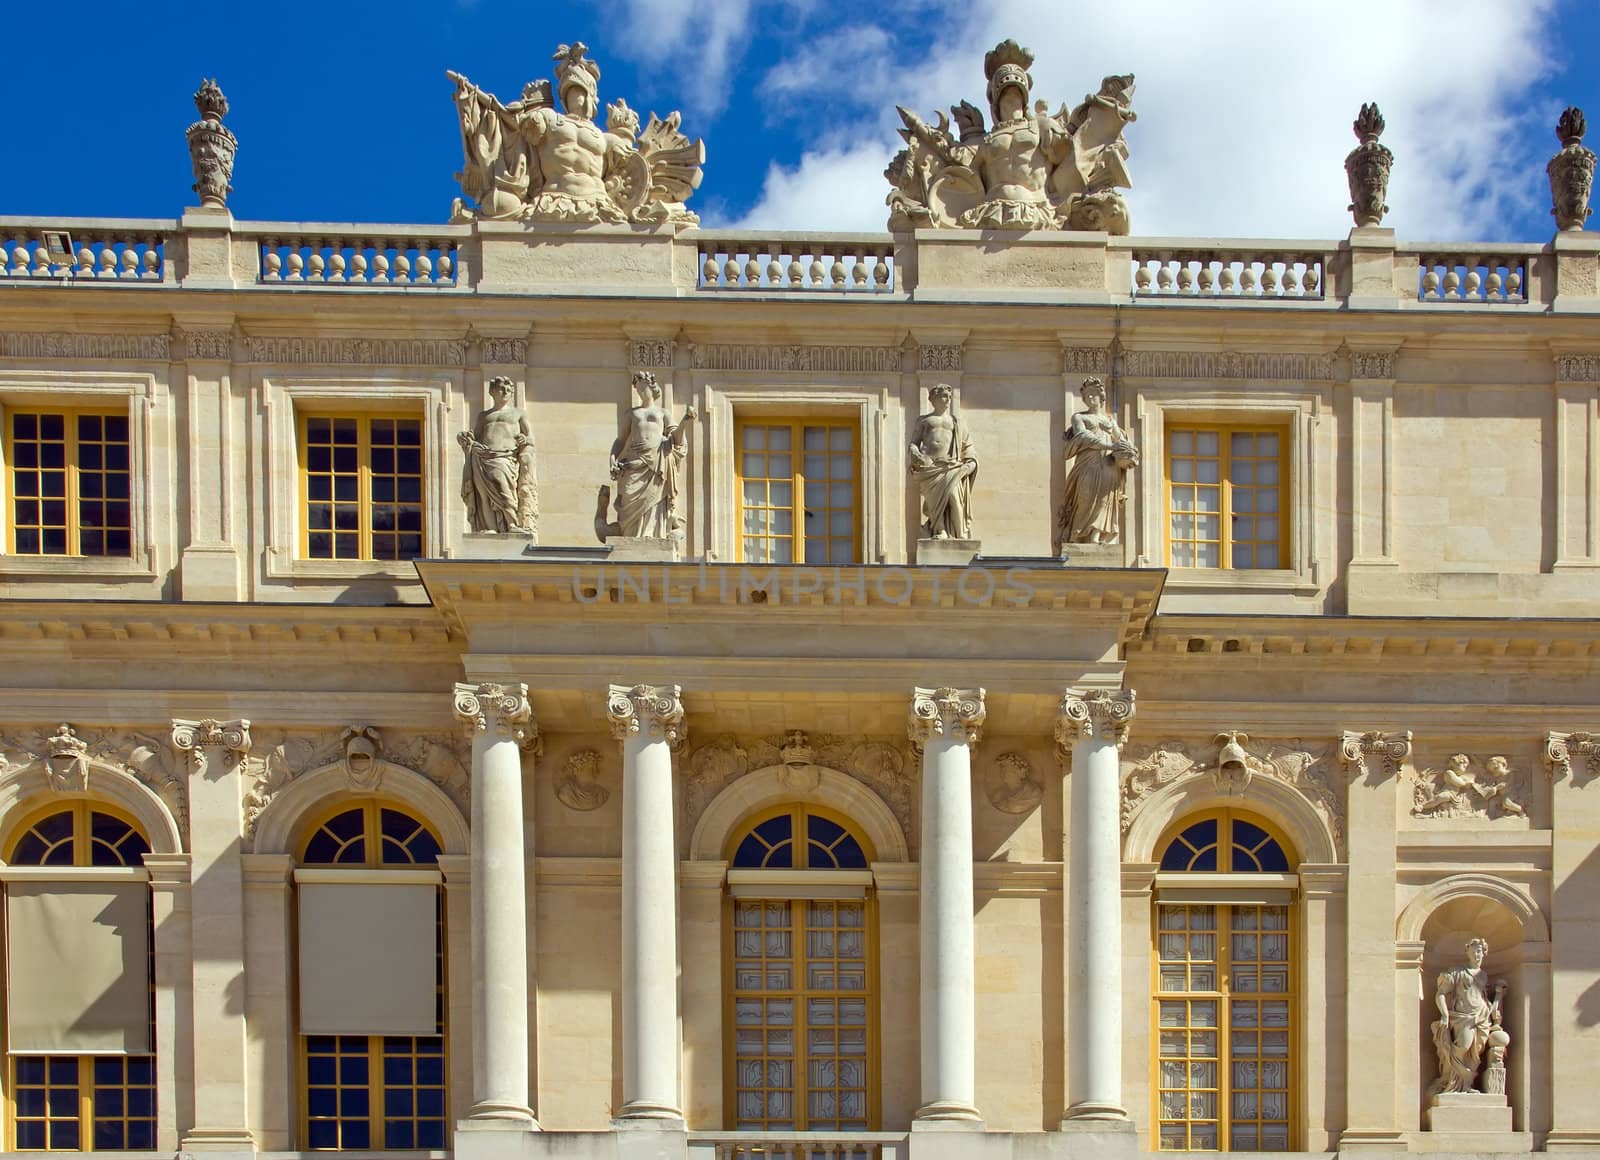 castle of Versailles (France) by neko92vl